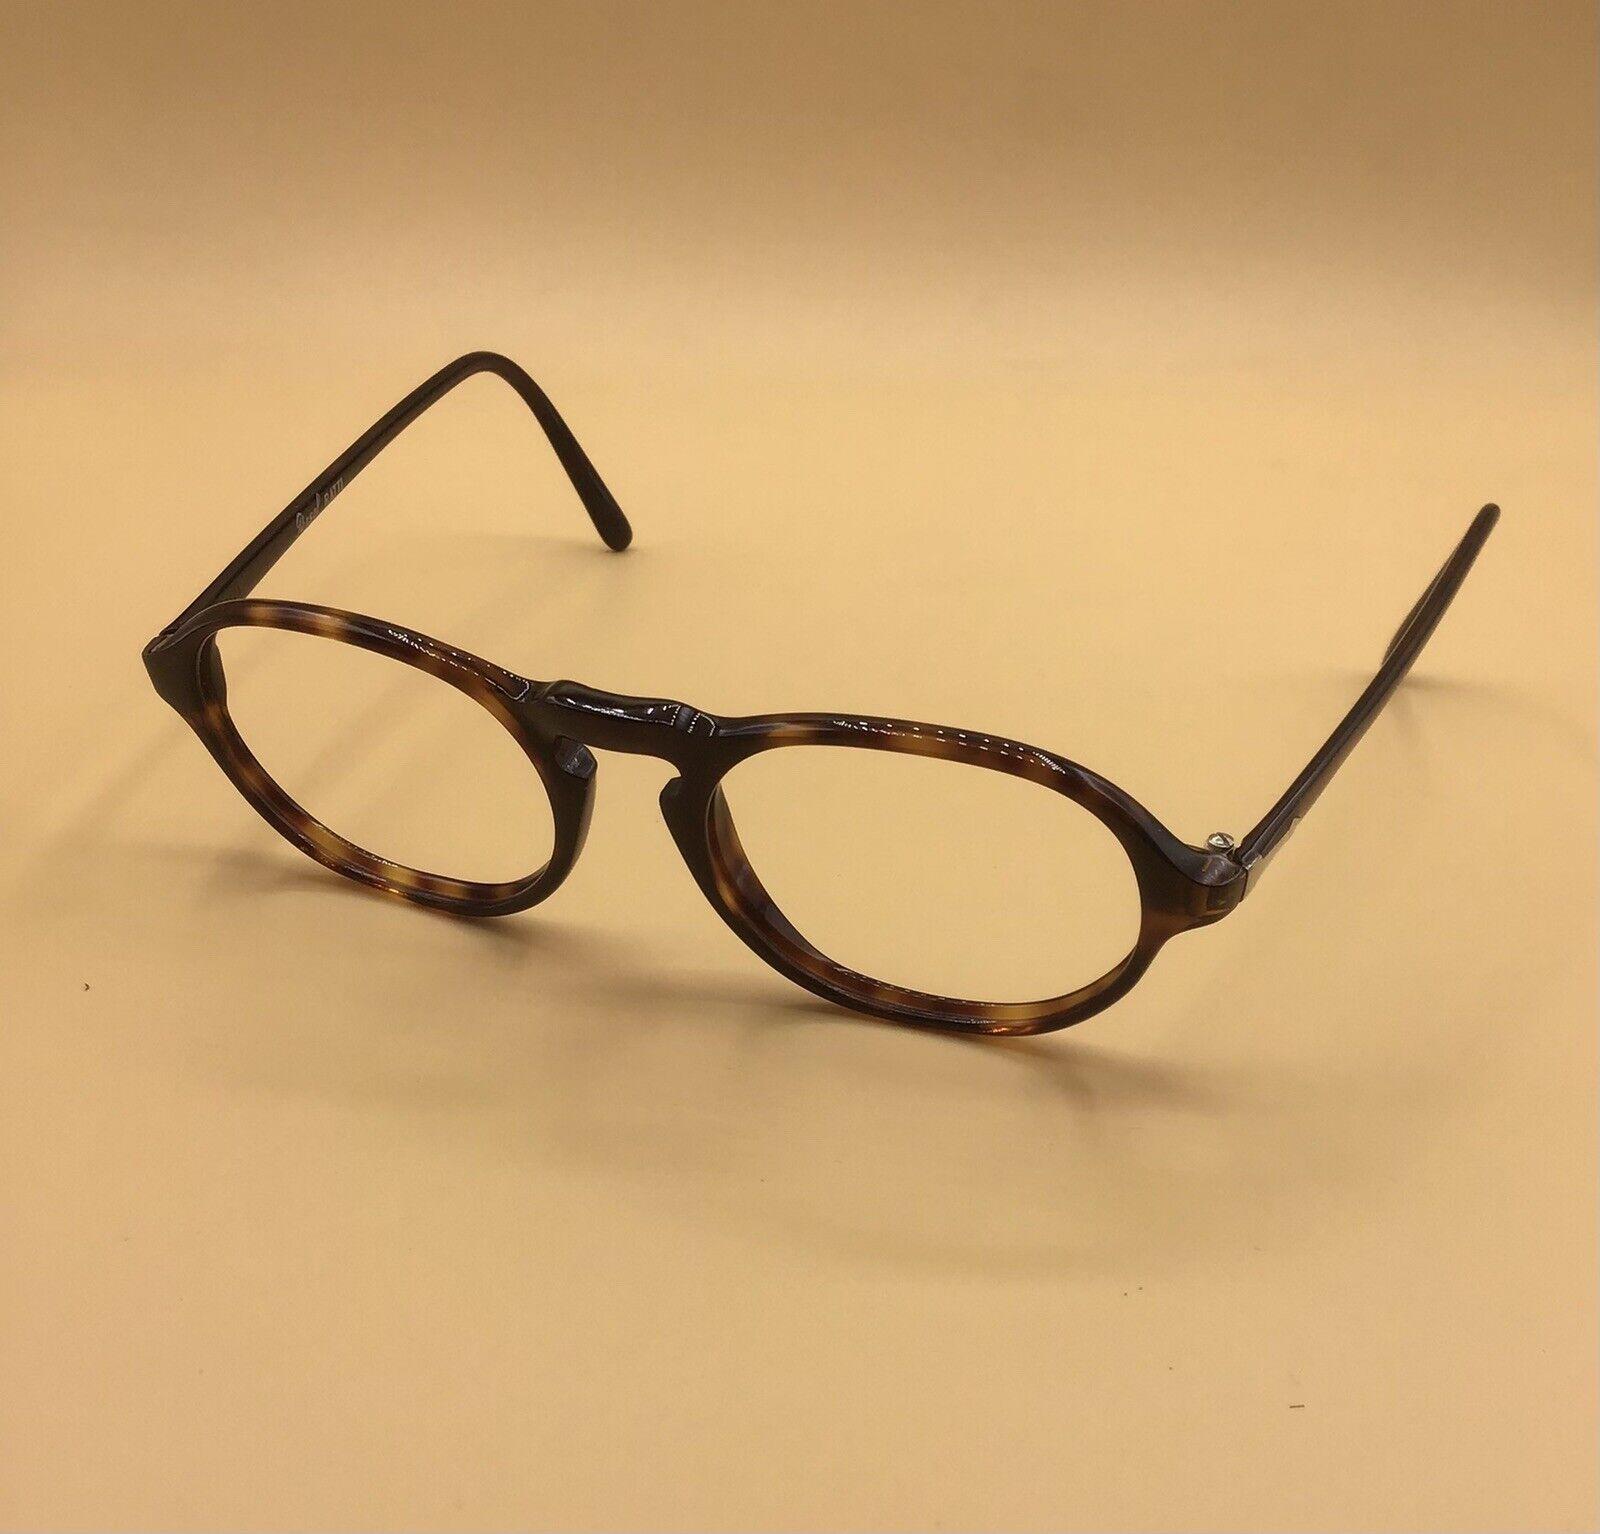 Persol Ratti modello 09171 meflecto occhiale vintage eyewear frame brillen lunettes